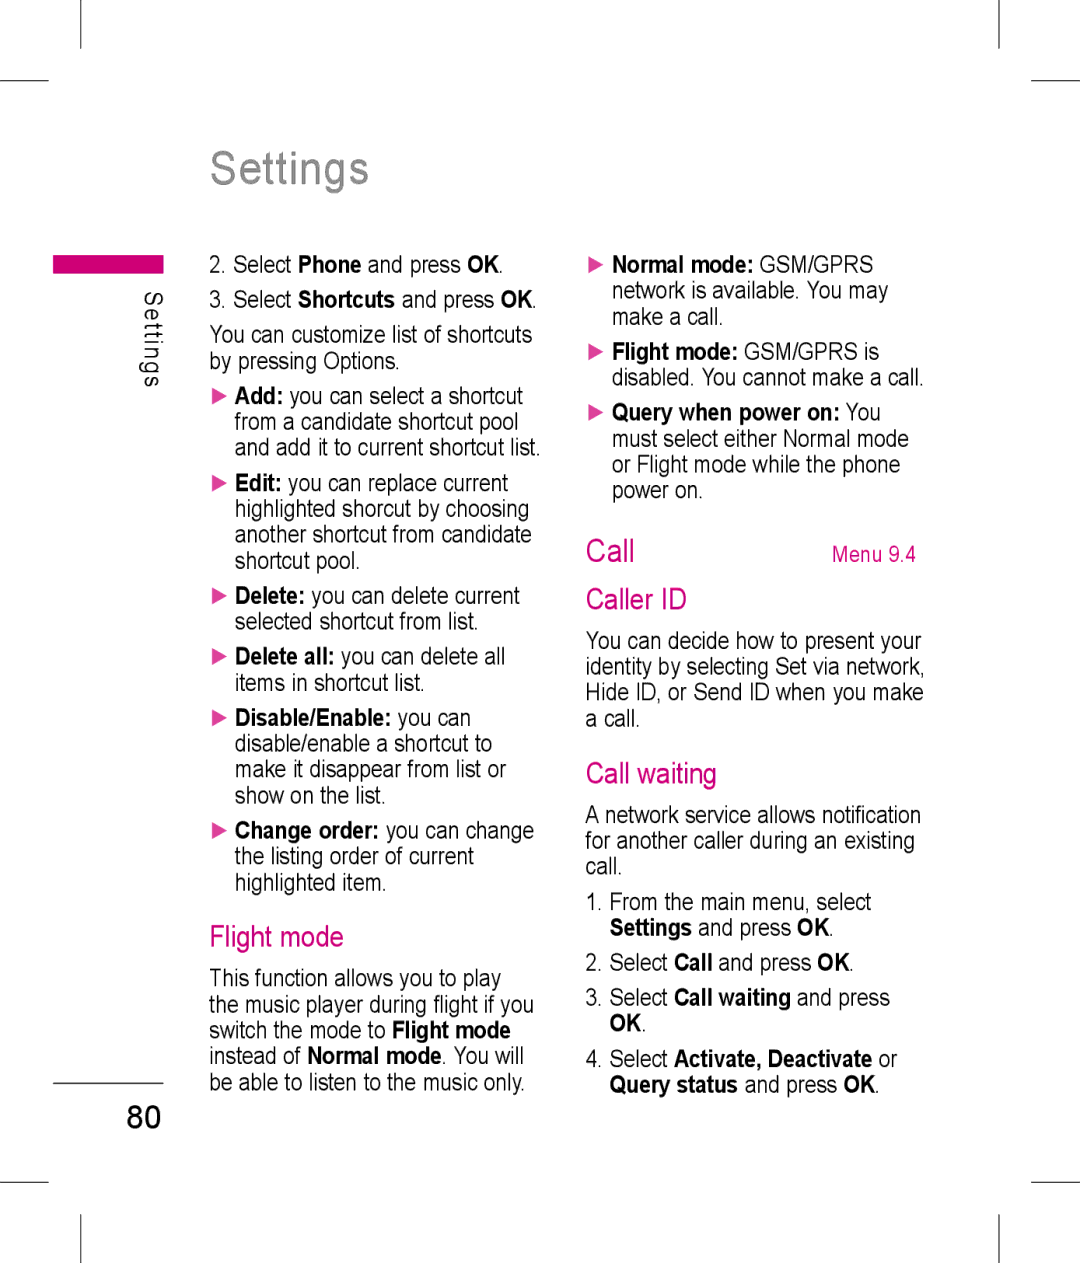 LG Electronics KP199 manual Flight mode, Caller ID, Select Call waiting and press OK 